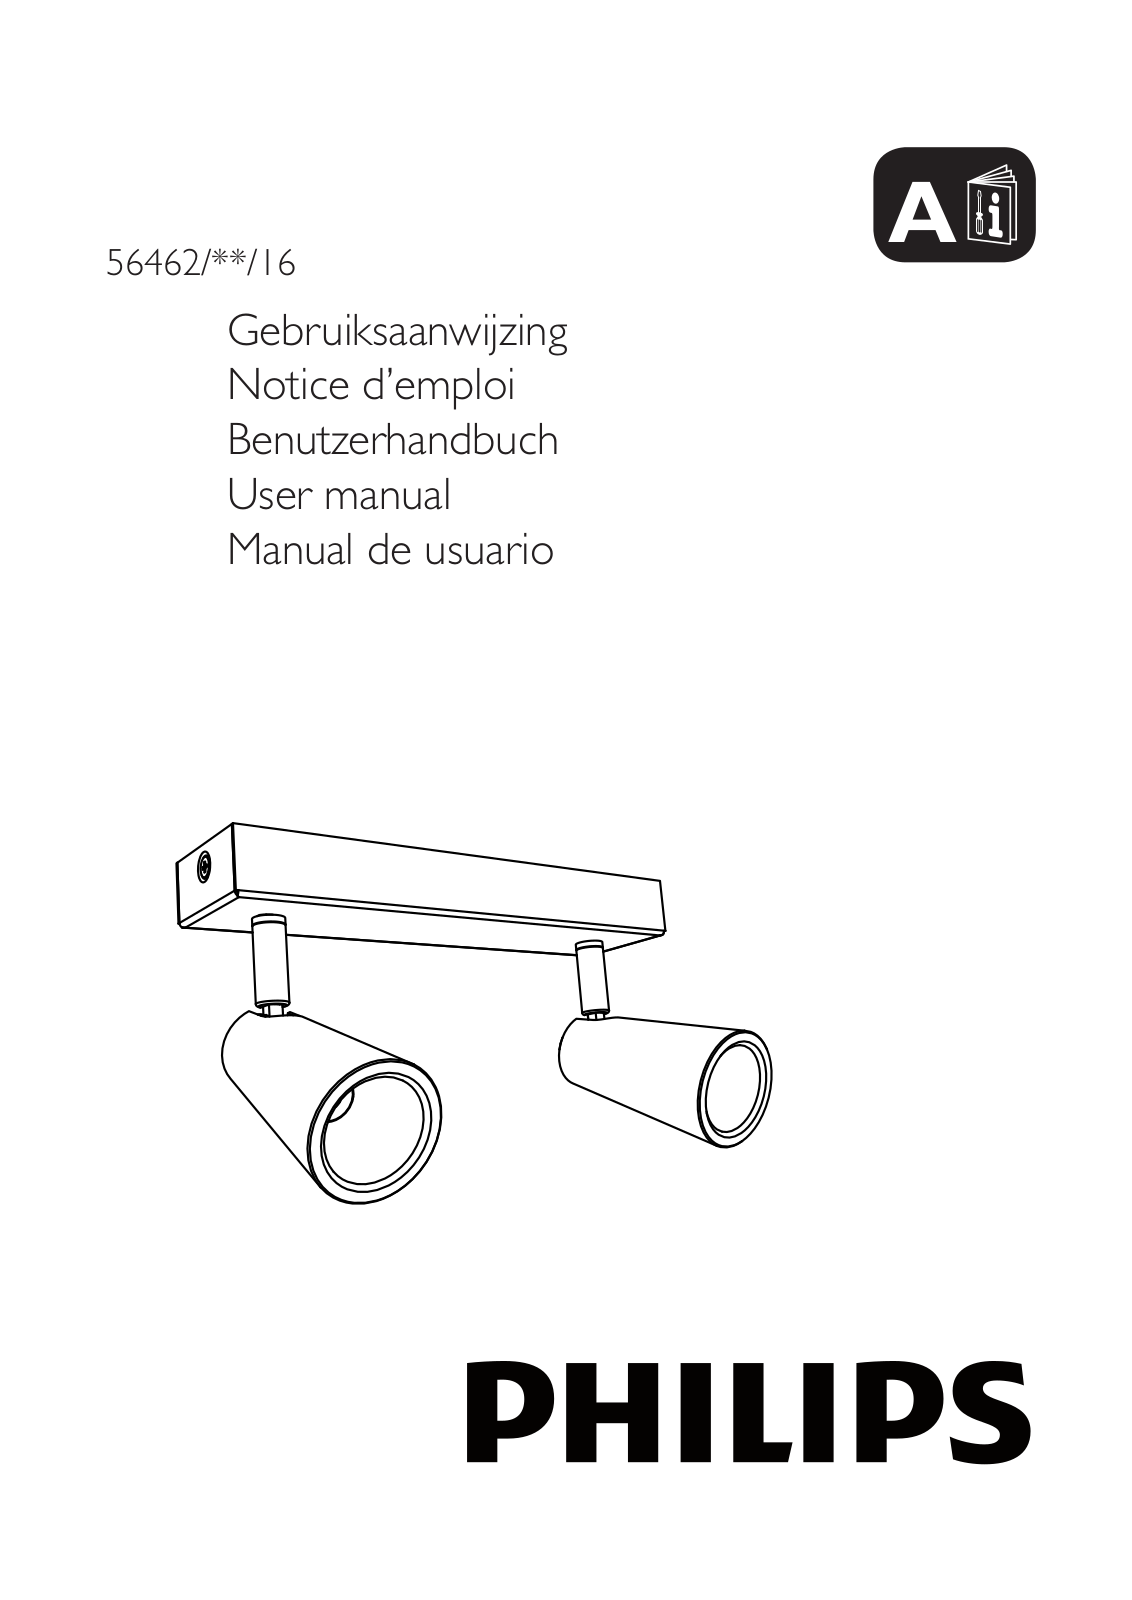 Philips 56462-48-16 User Manual